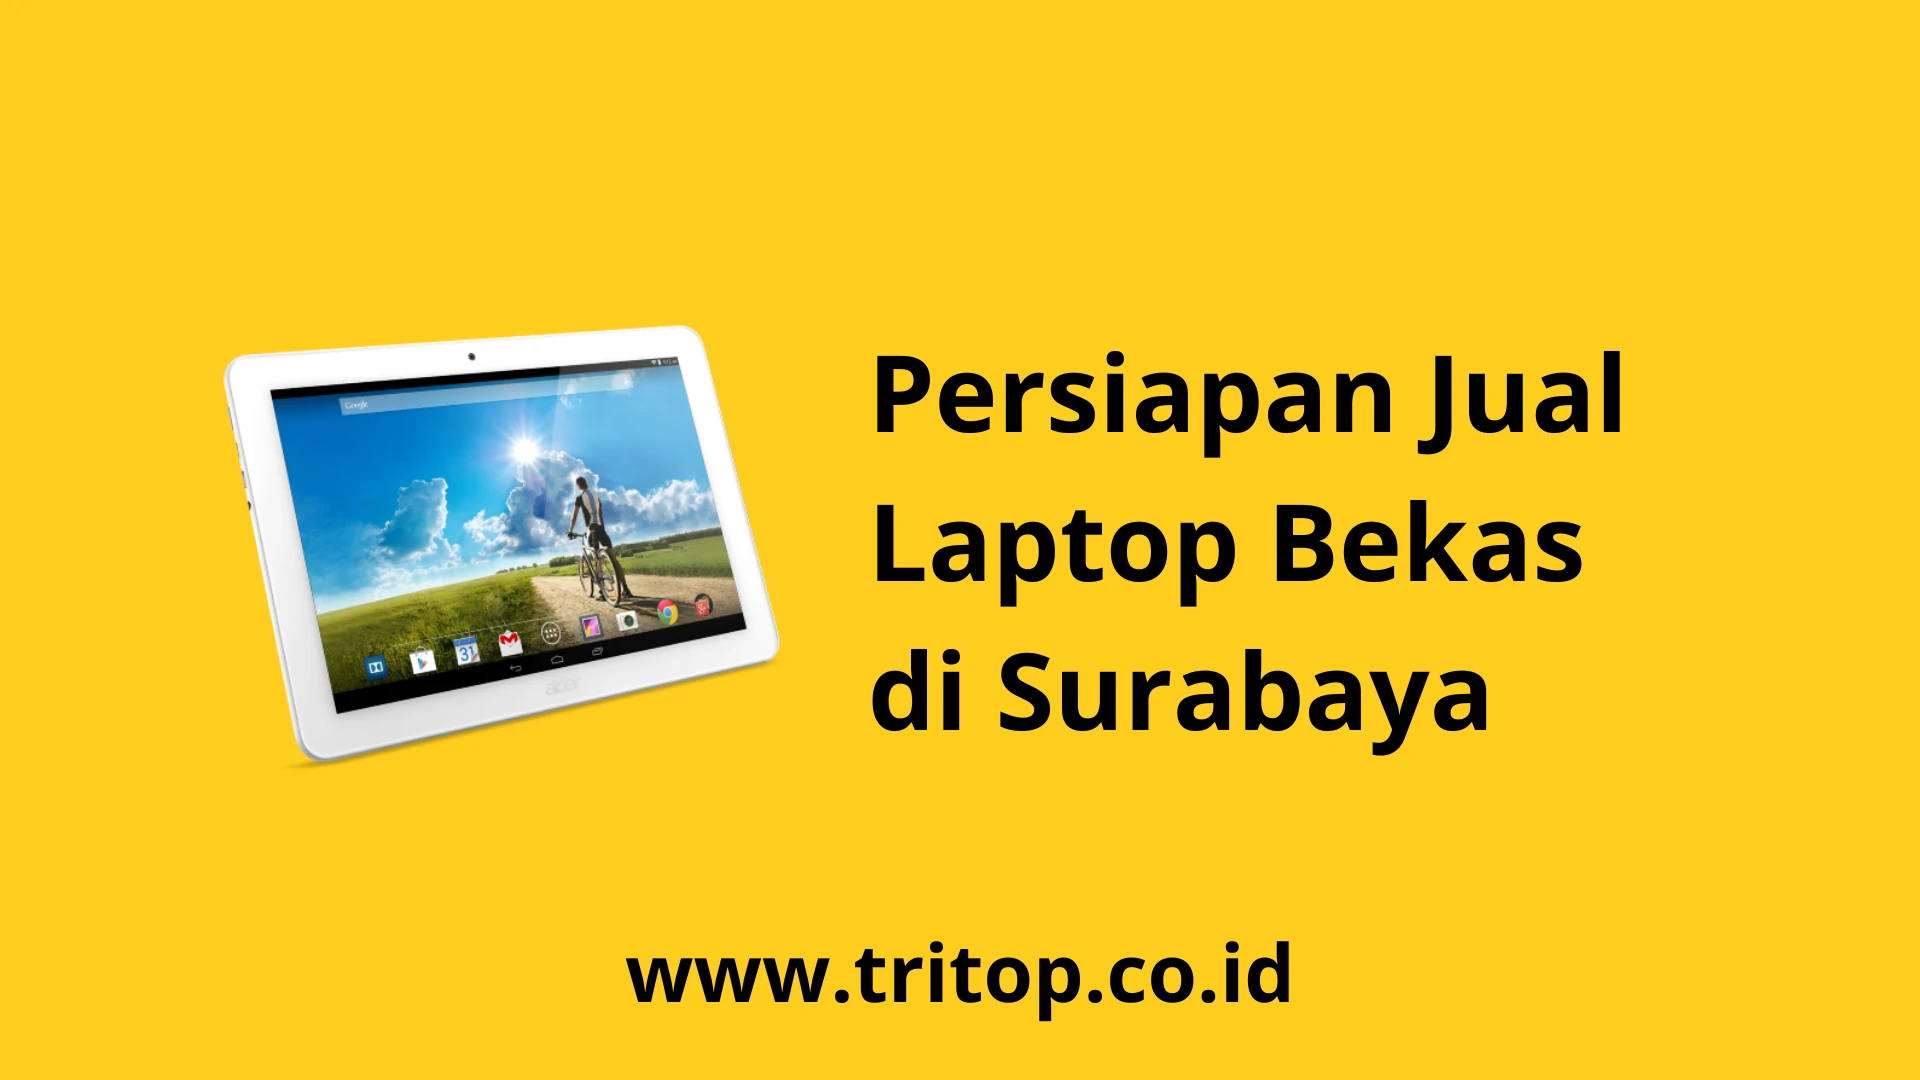 Jual Laptop Bekas di Surabaya Tritop.co.id